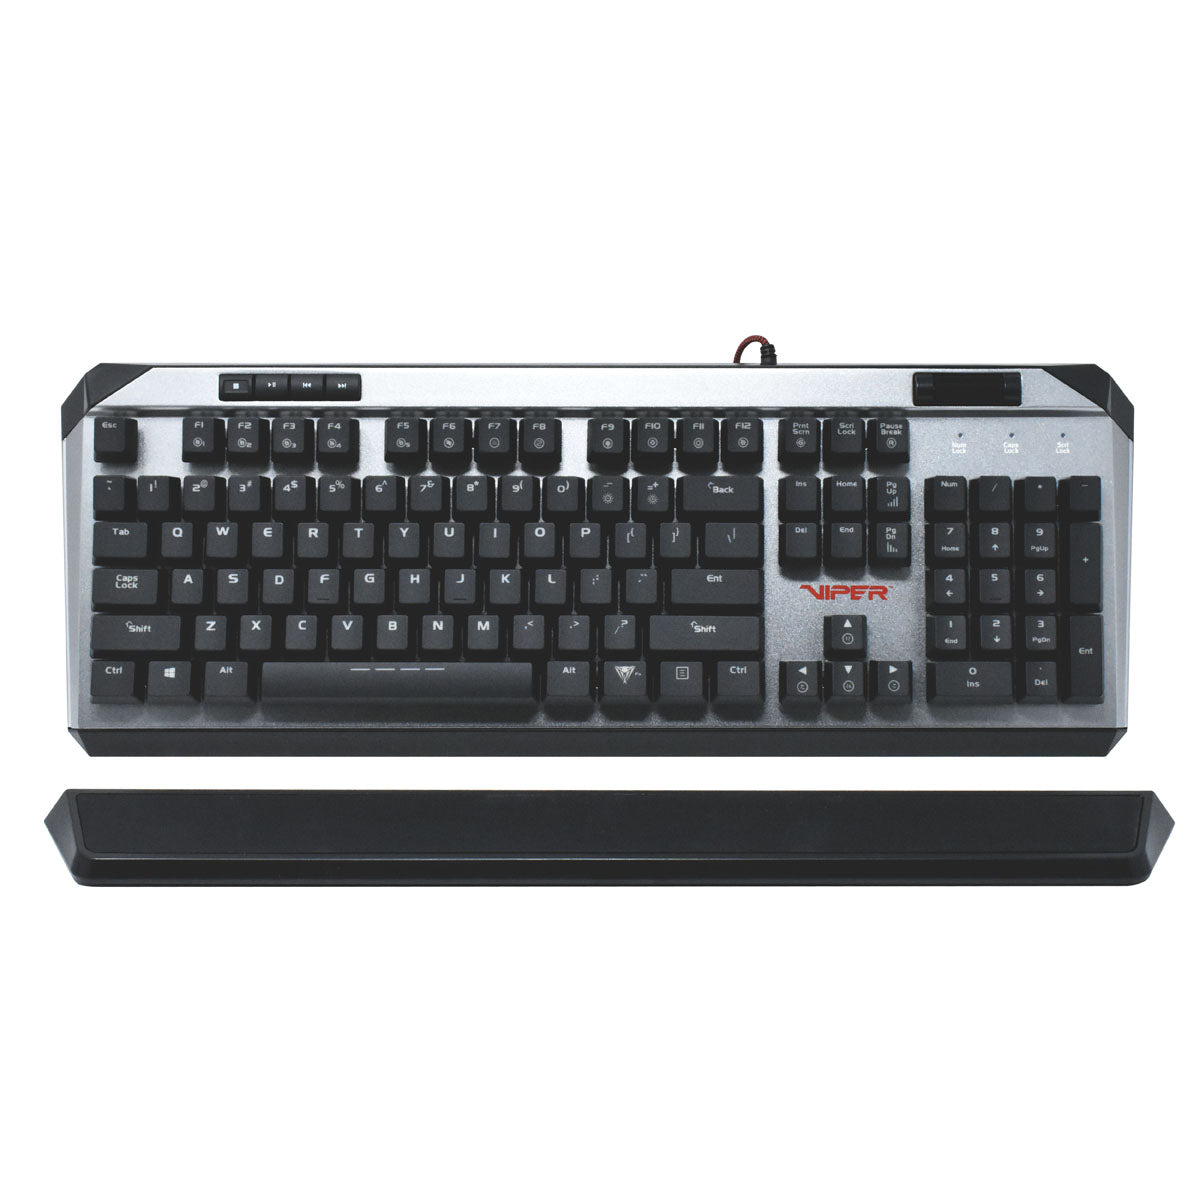 Patriot Viper V765 Gaming Keyboard